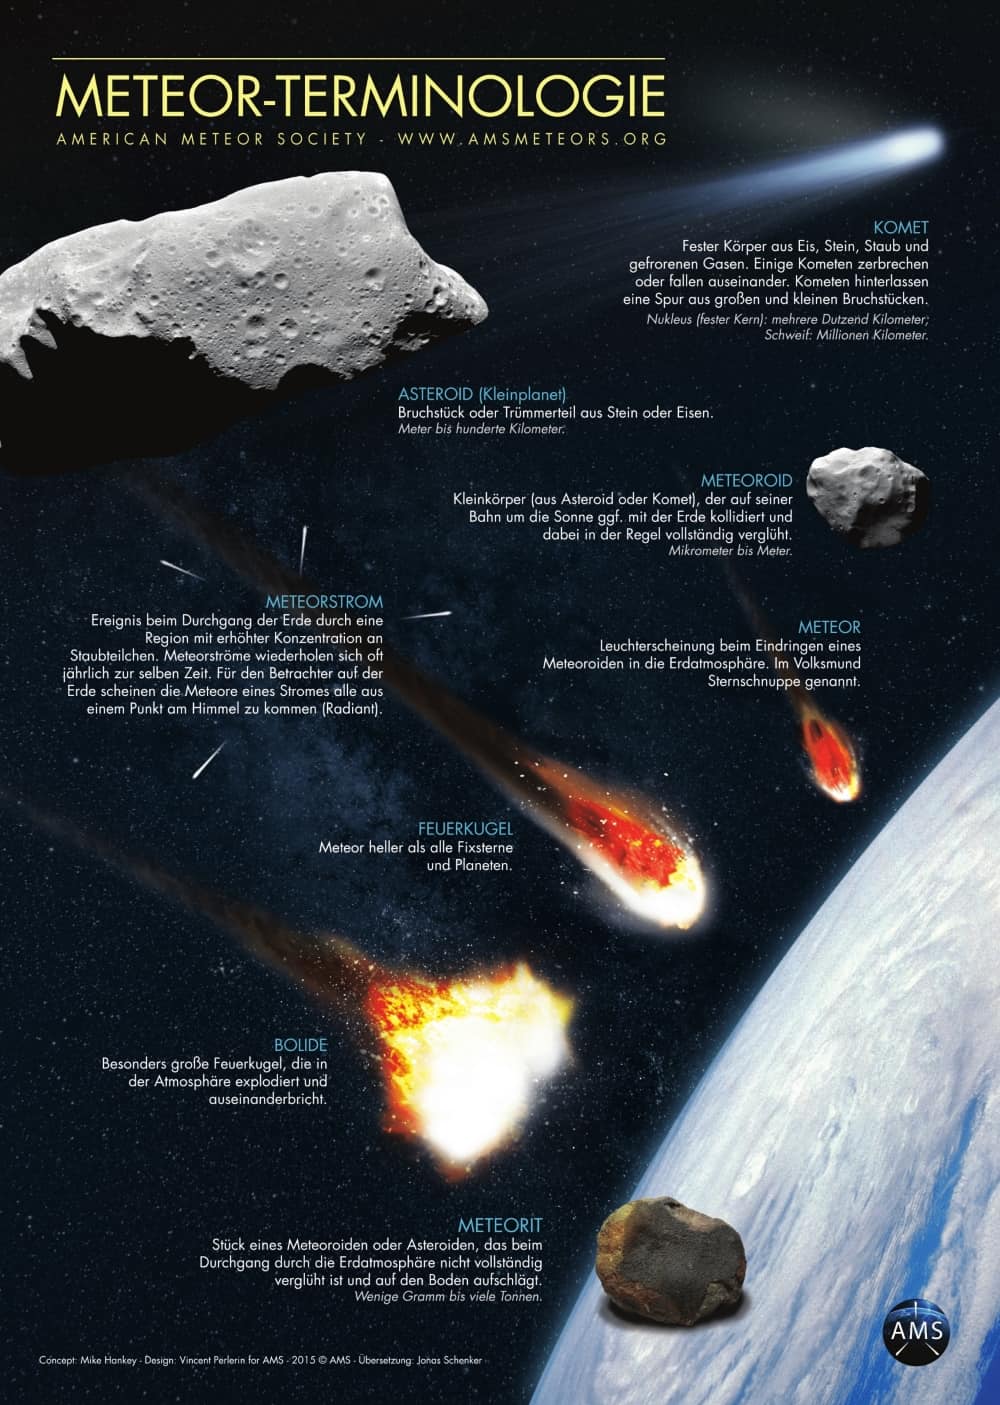 Meteor-Terminologie: Unterschied zwischen Meteor, Meteorstrom, Komet, Asteroid, Meteoroid, Feuerkugel, Bolide und Meteorit